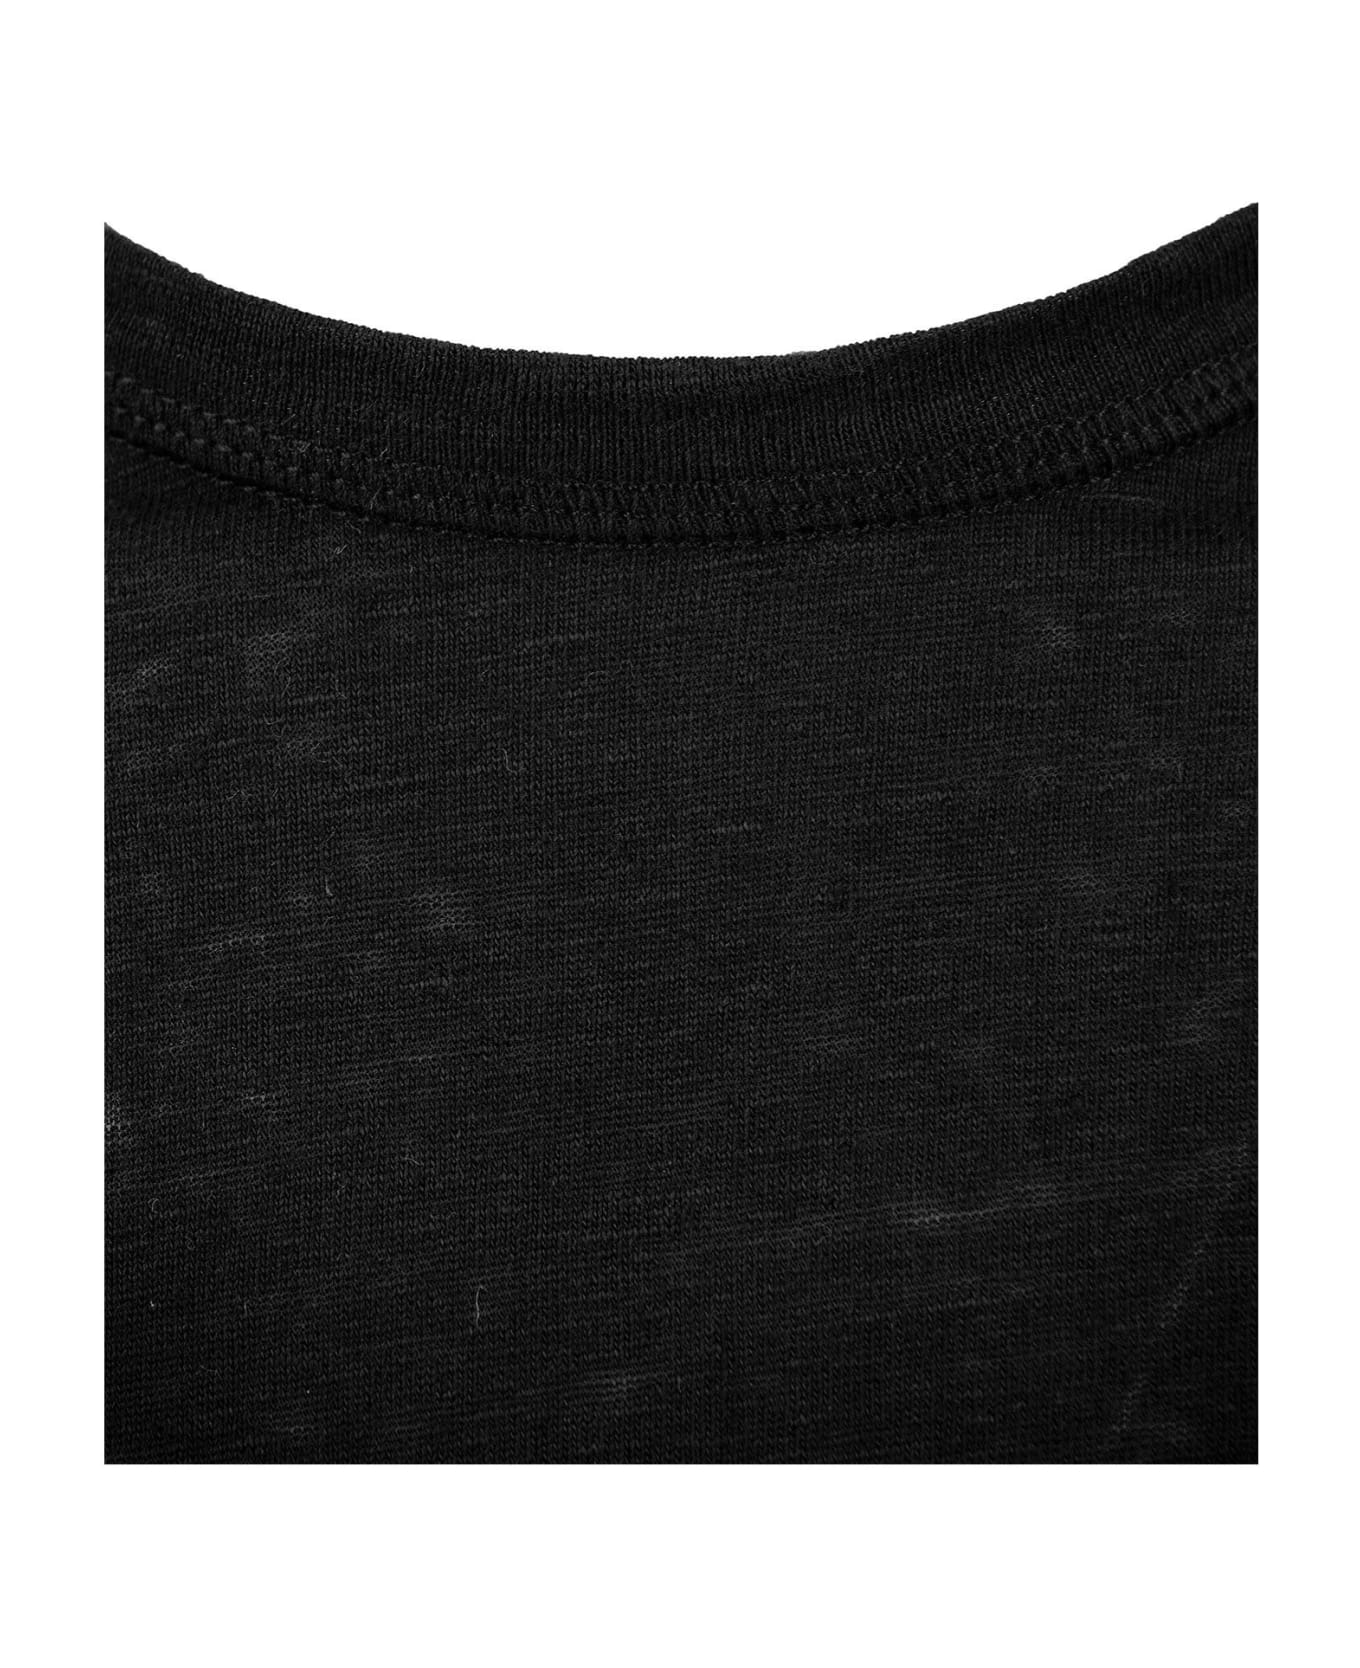 Majestic Filatures Short-sleeved Slim-fit Crew Neck T-shirt - Black